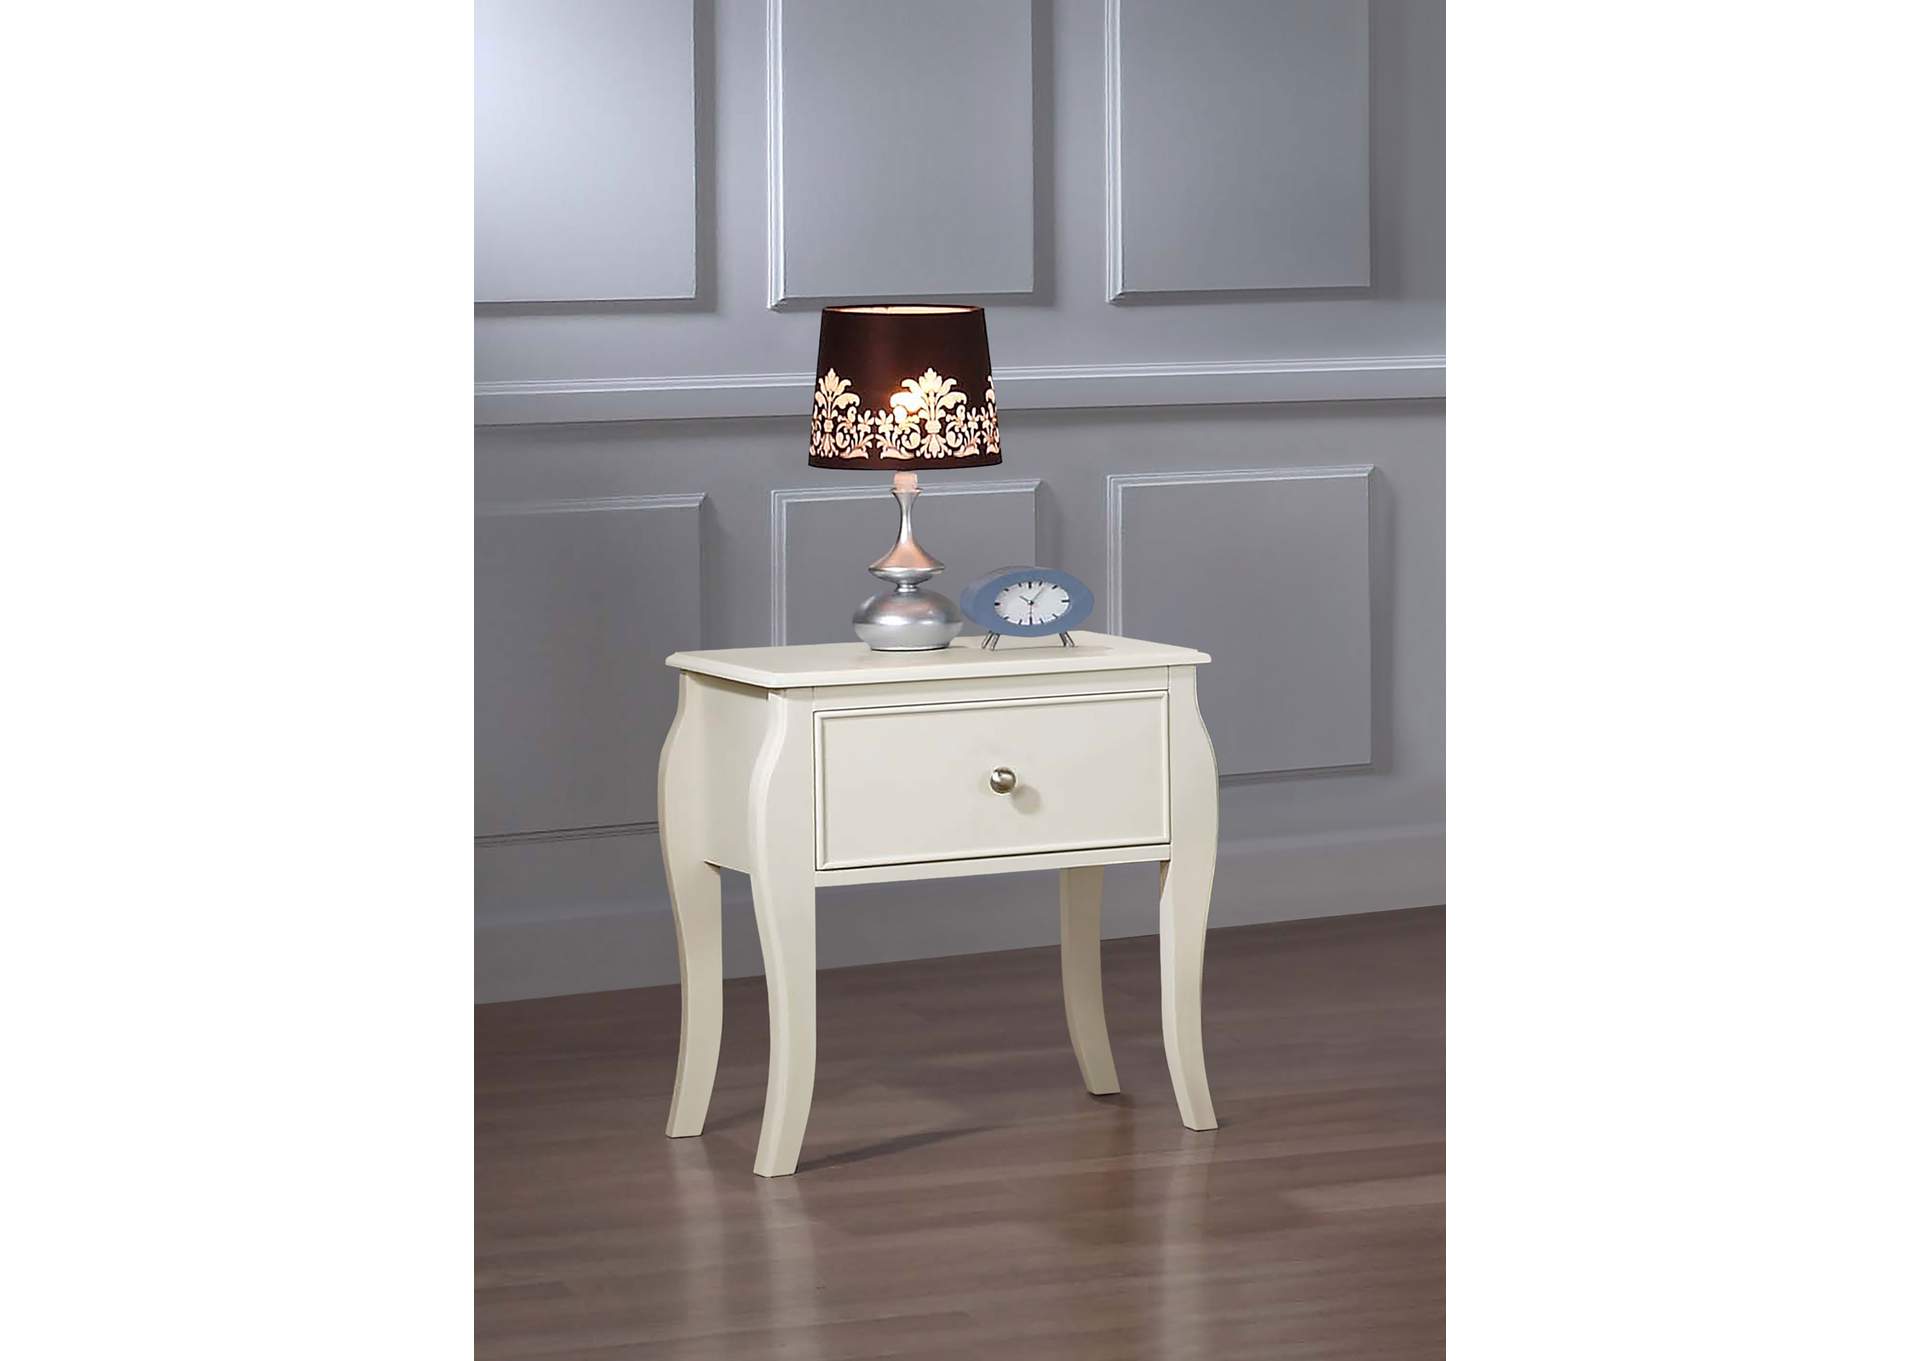 Dominique 1-drawer Nightstand White,Coaster Furniture